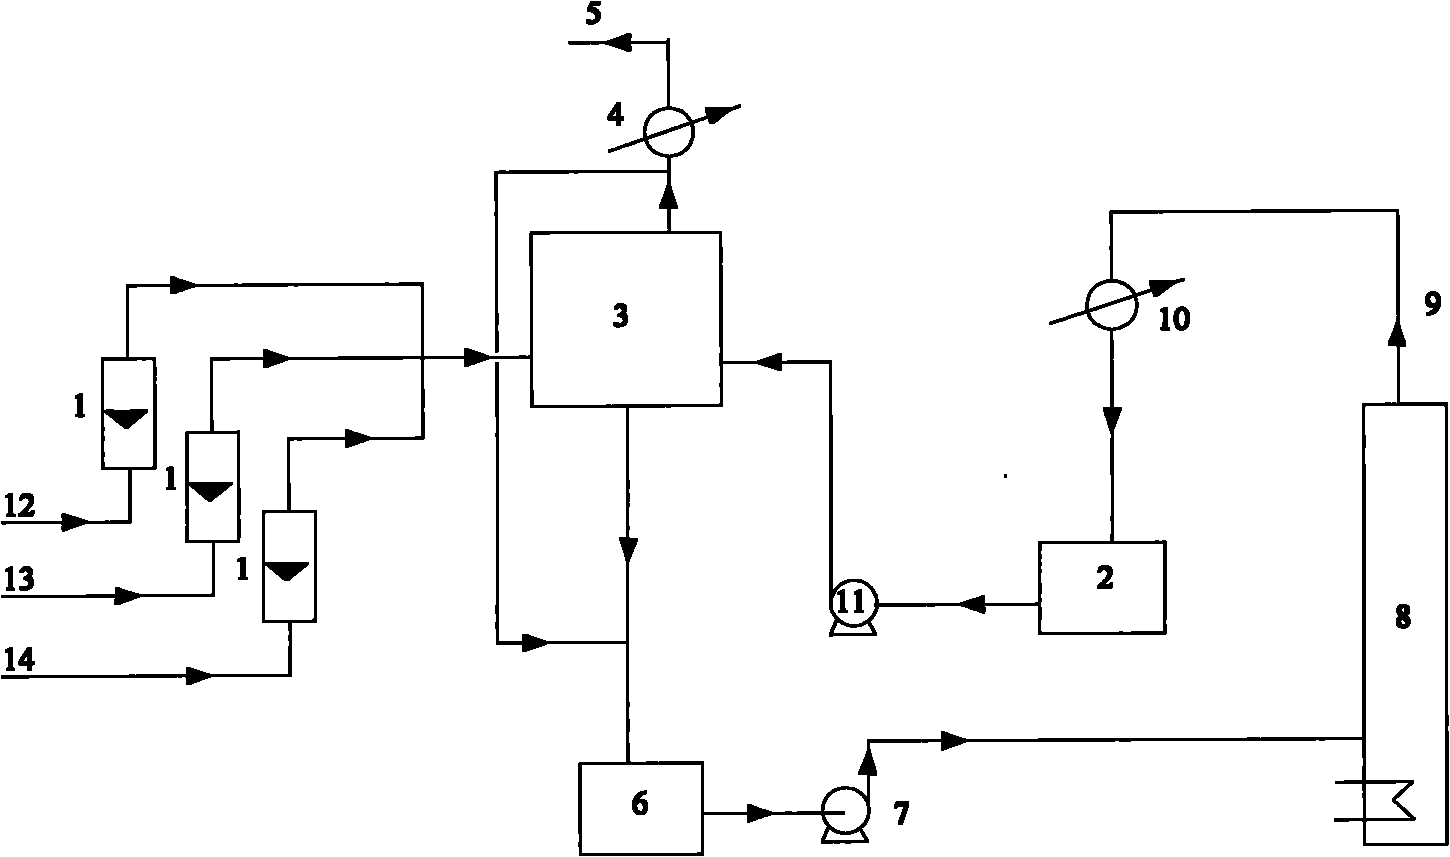 Process method and method for regenerating methyl nitrite in production of dimethyl oxalate